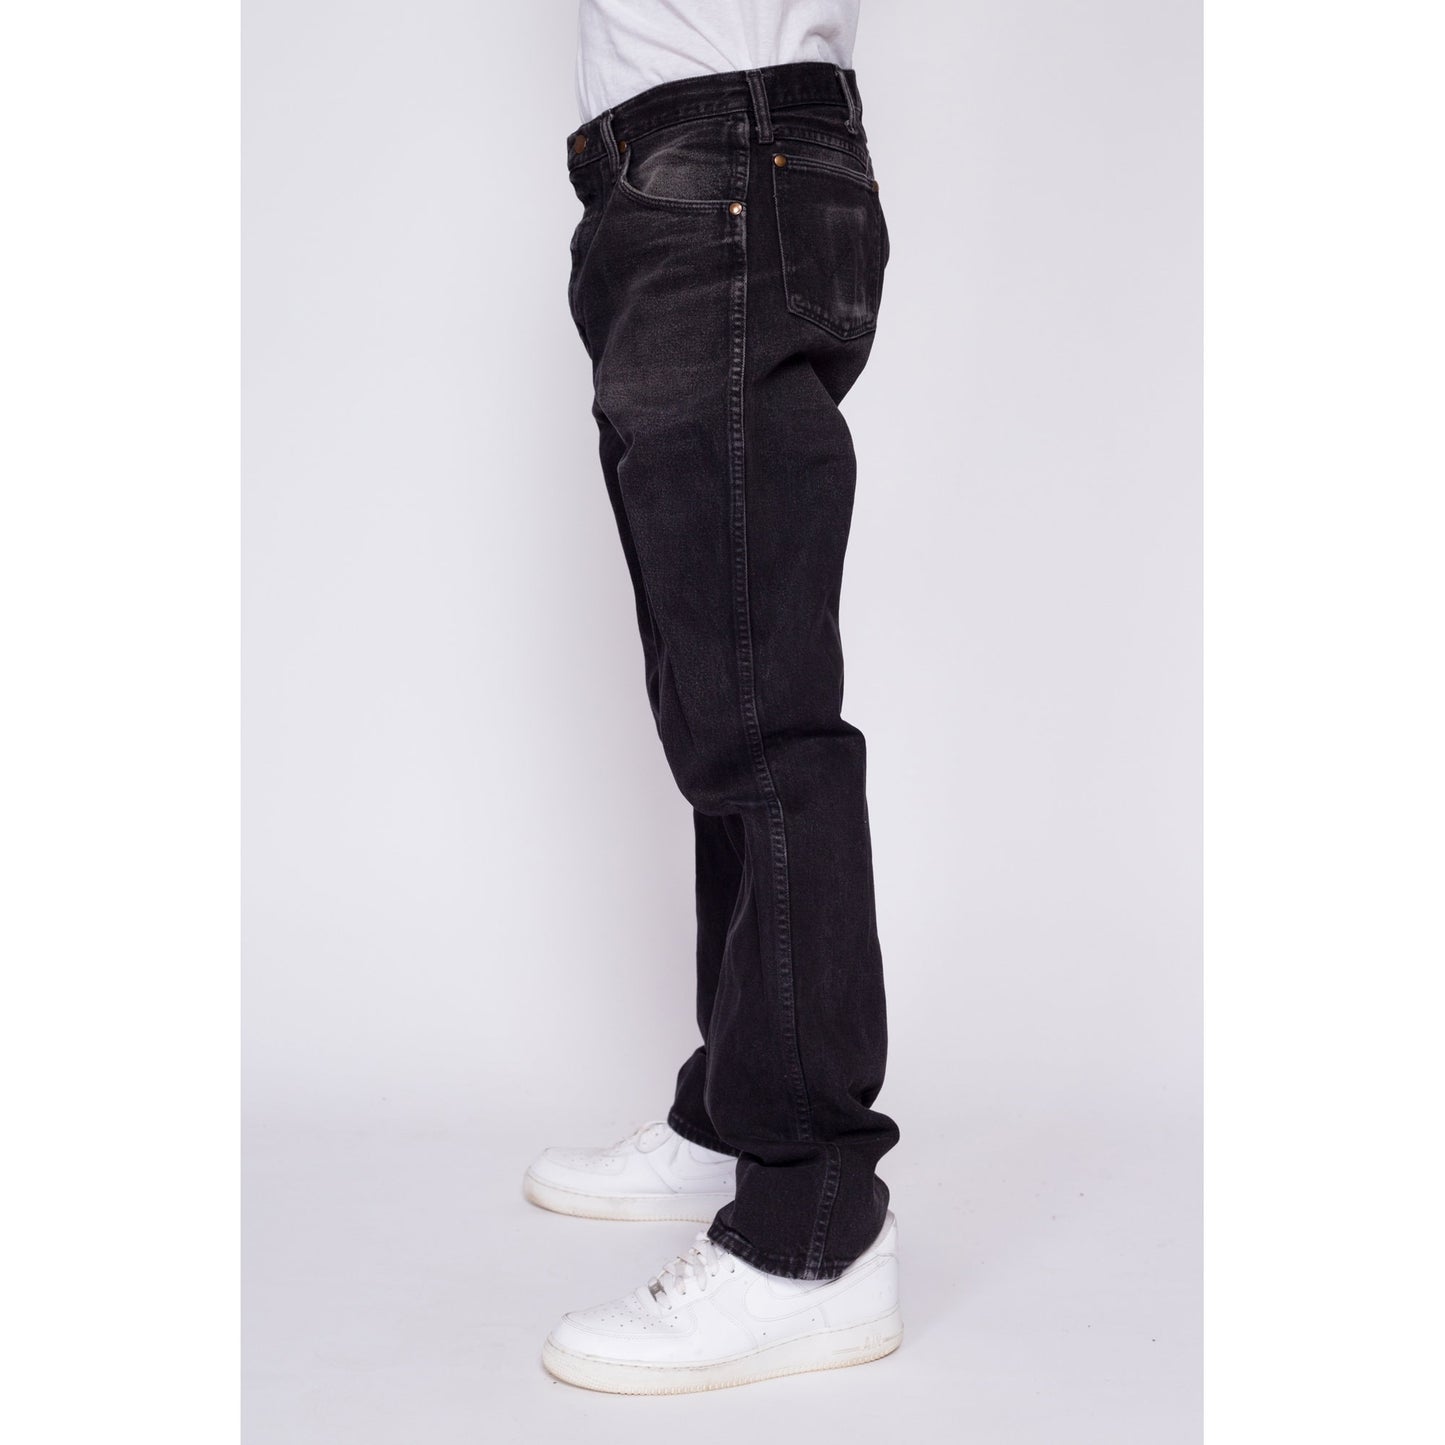 70s 80s Wrangler Black Jeans - 33x36 | Vintage Faded Denim Distressed Baggy Straight Leg Jeans